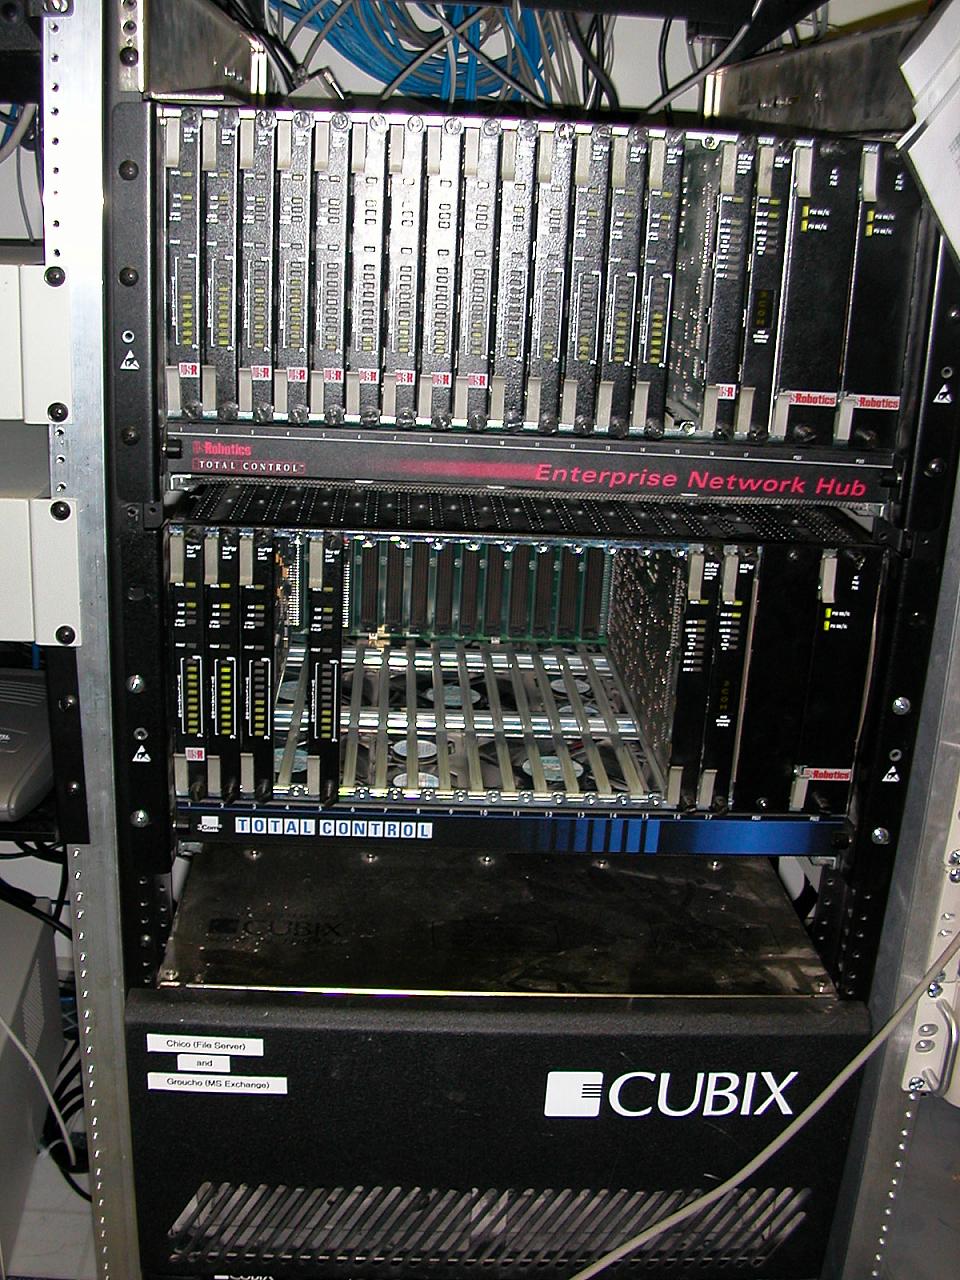 The ISP's main RAS equipment, US Robotics Total Control units.  The telco's cubix server is sitting below them.